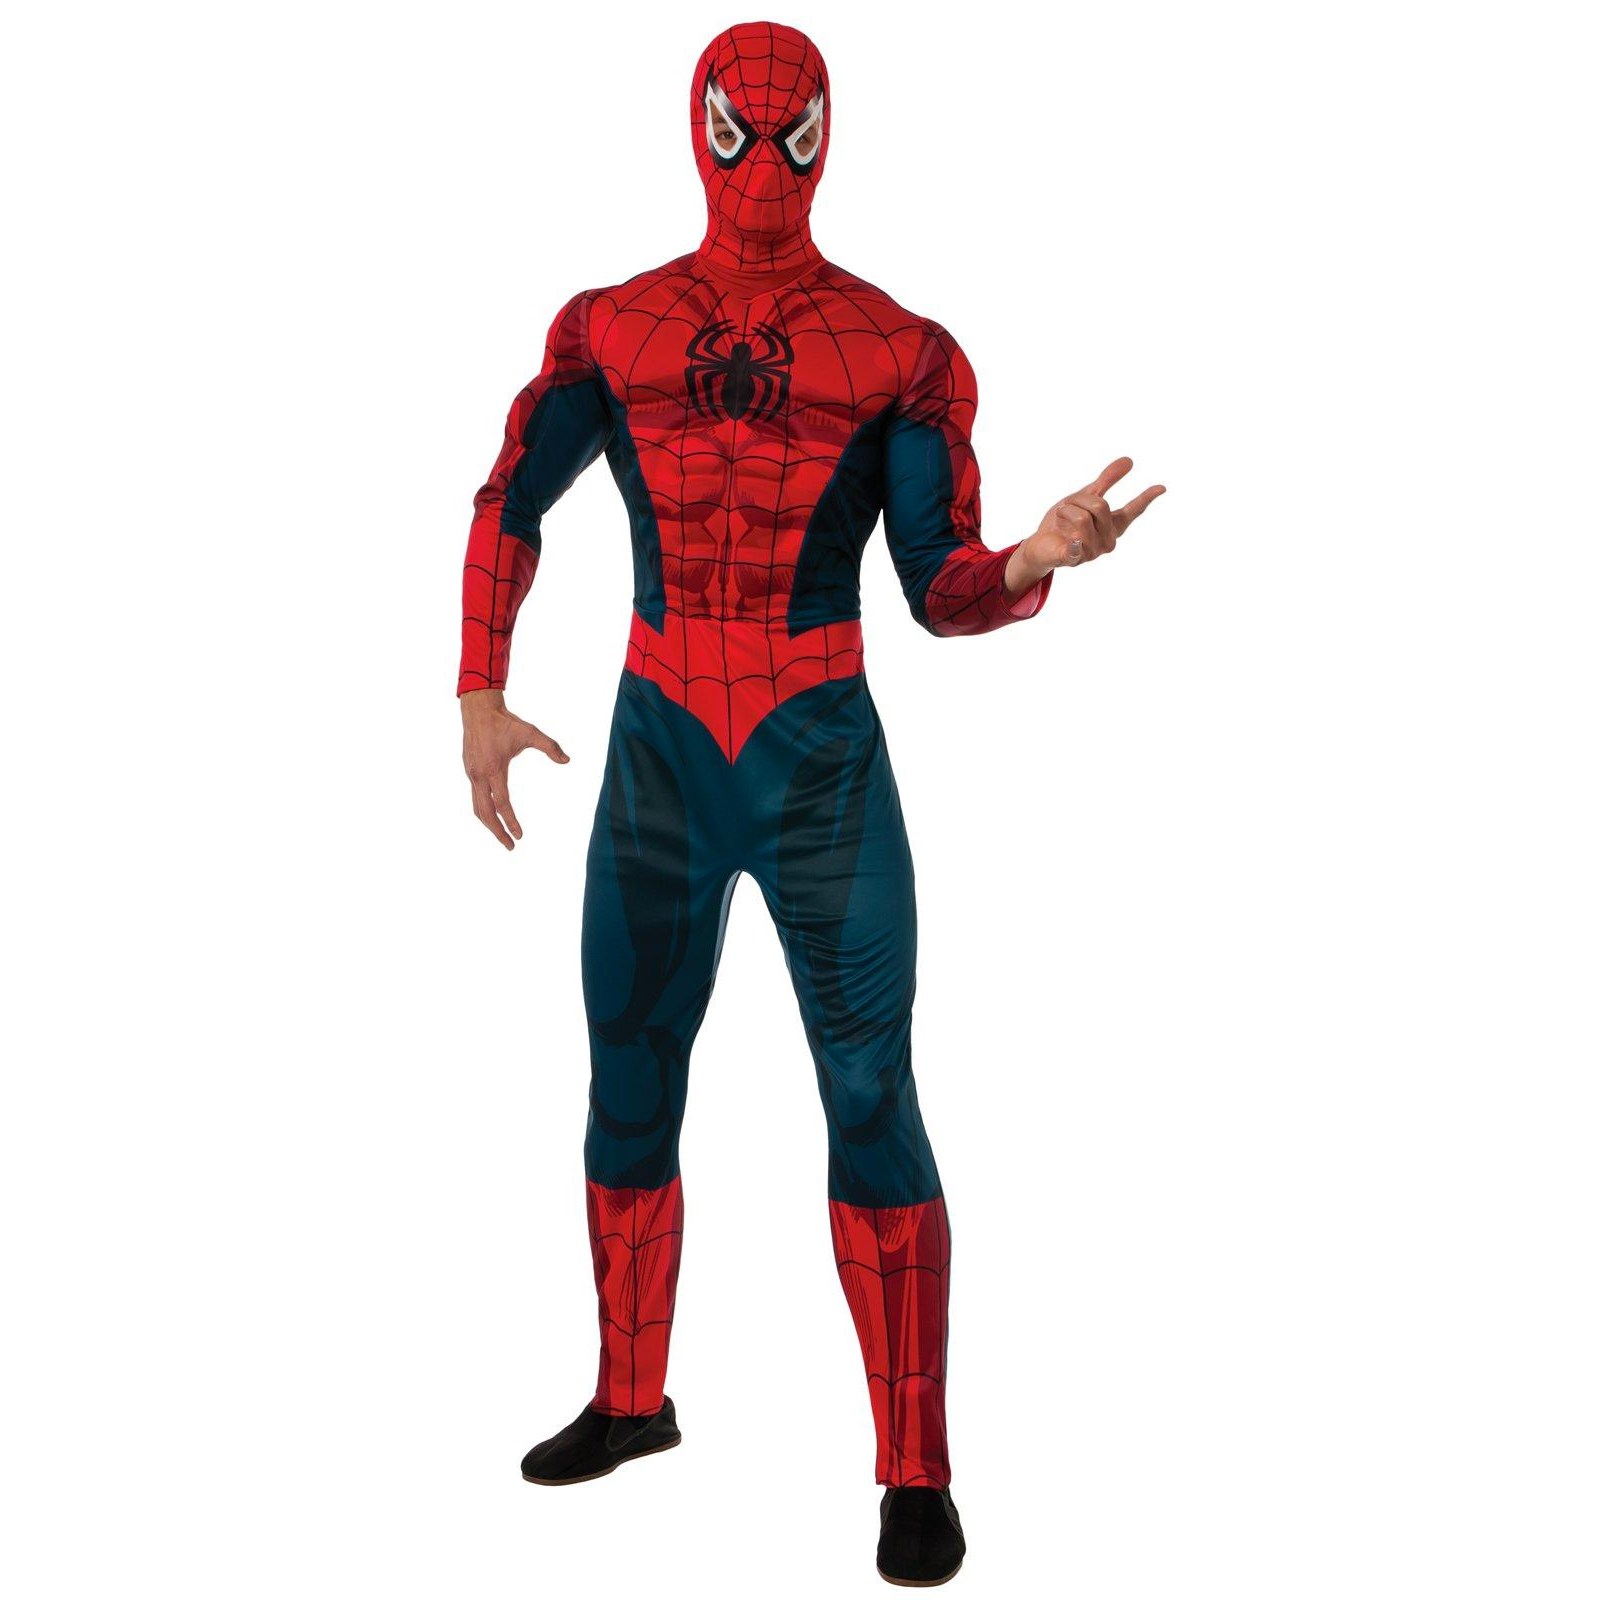 Deluxe Adult Spider-Man Costume